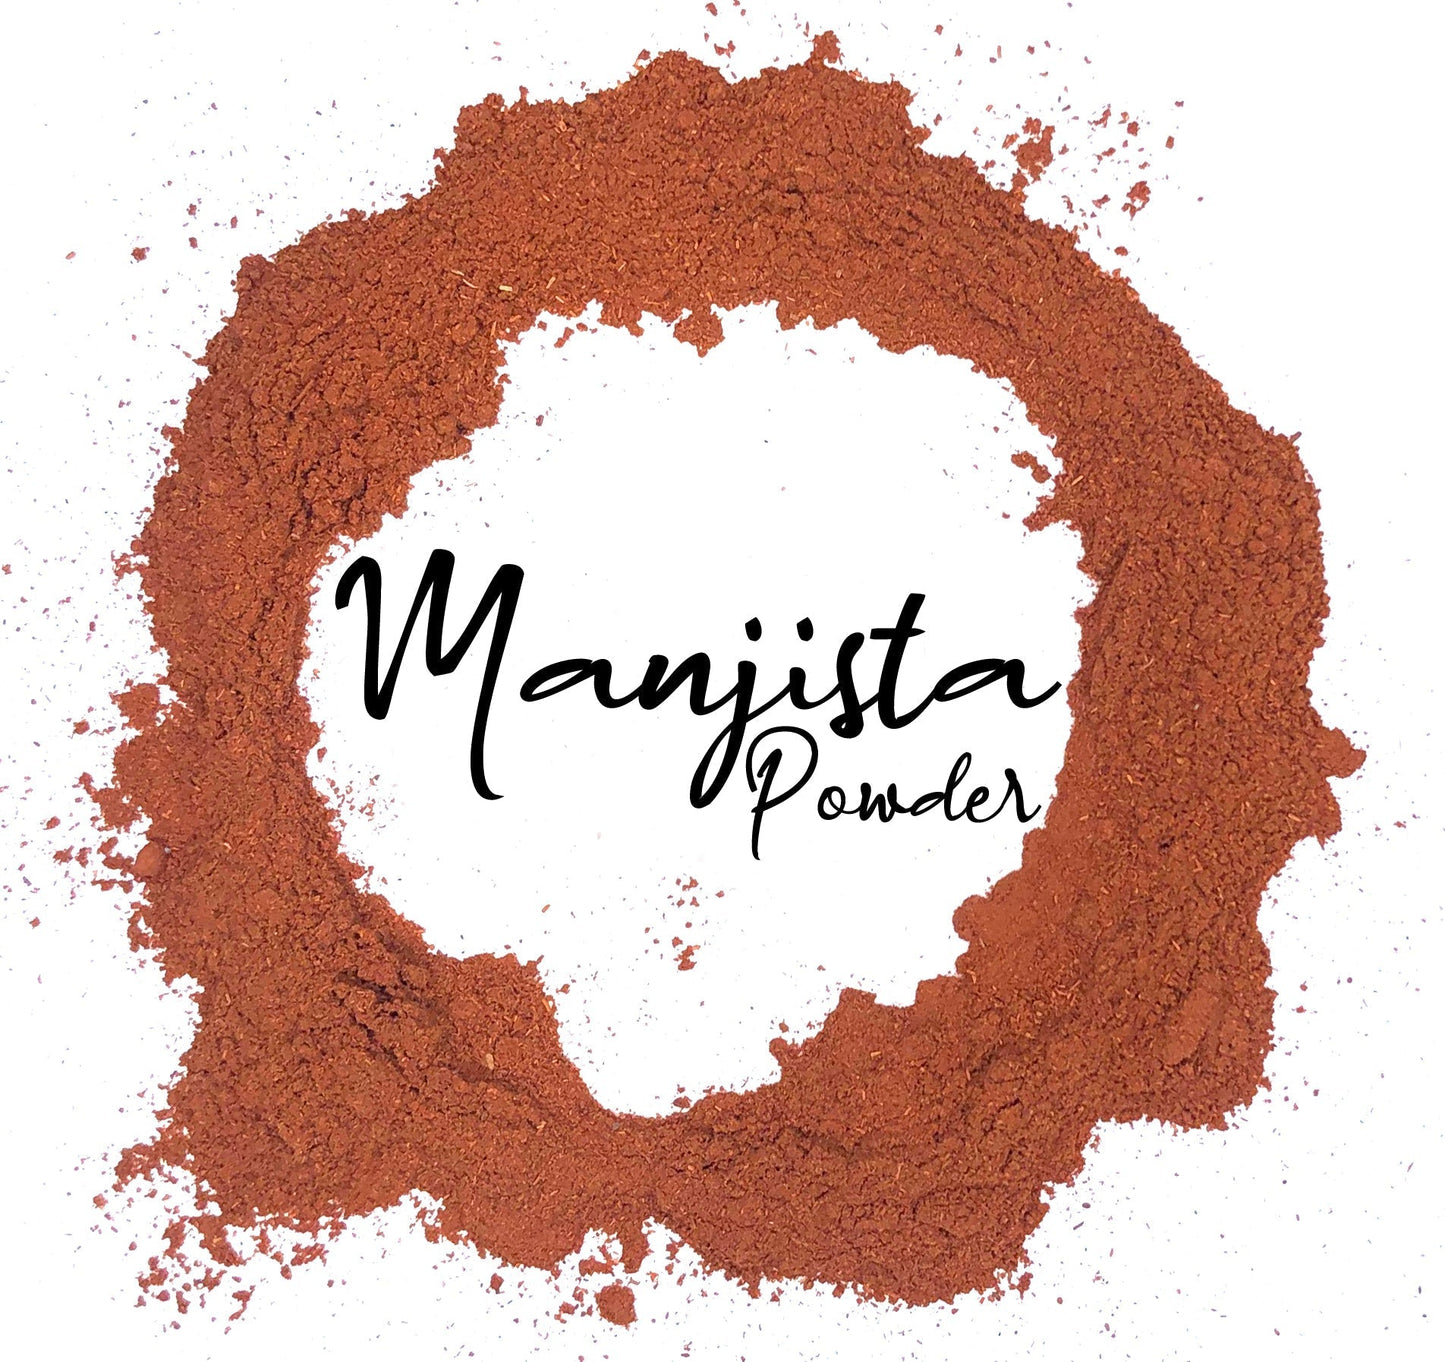 Wholesale Spices & Herbs - Manjista Powder, Organic 1lb (454g) Bag